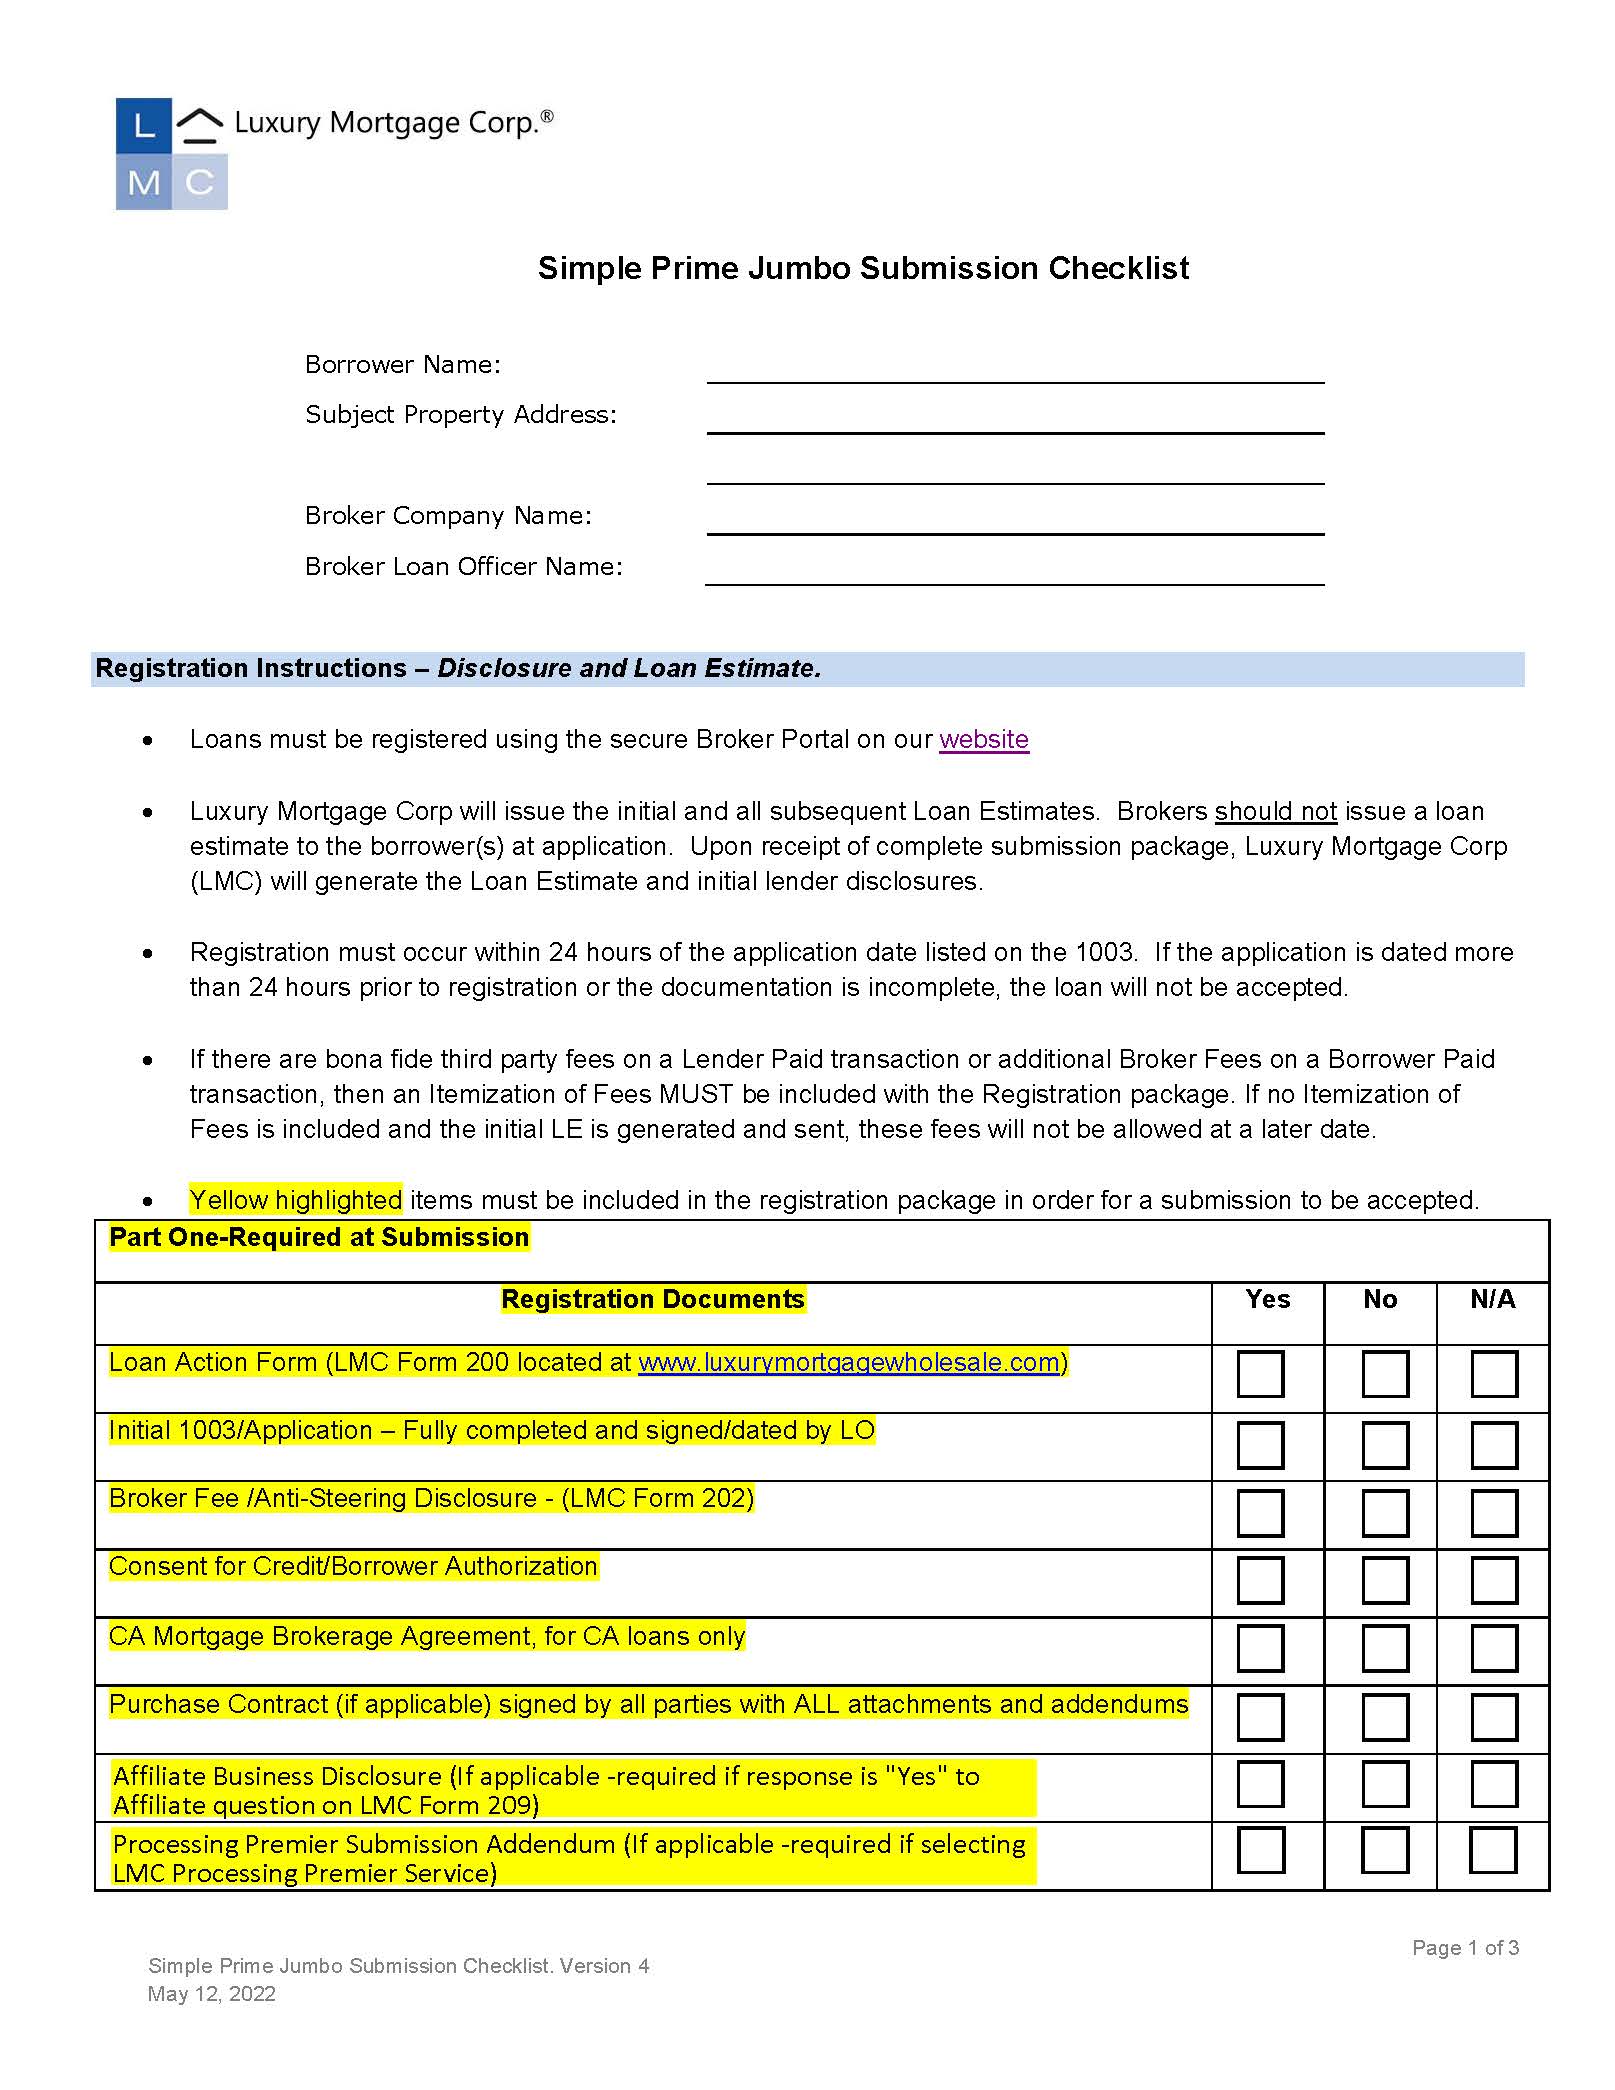 Jumbo Prime Submission Checklist V.4